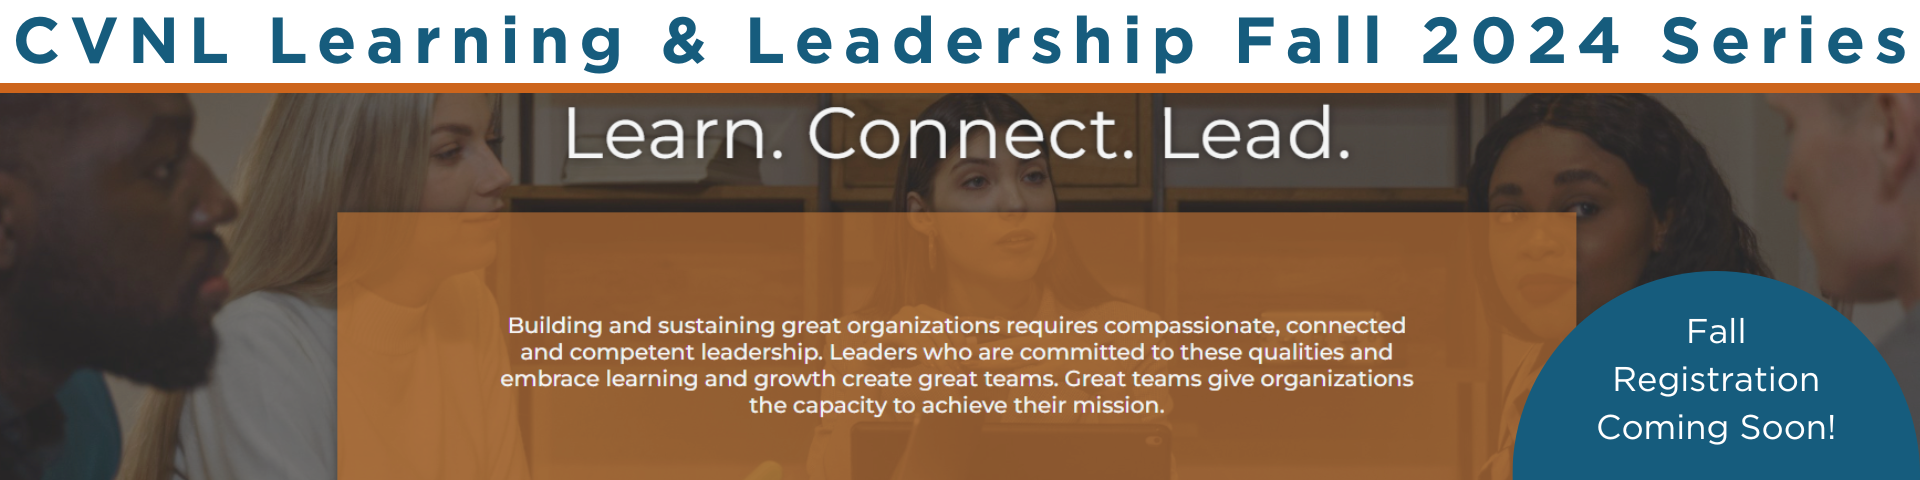 CVNL Learning & Leadership Fall 2024 Series